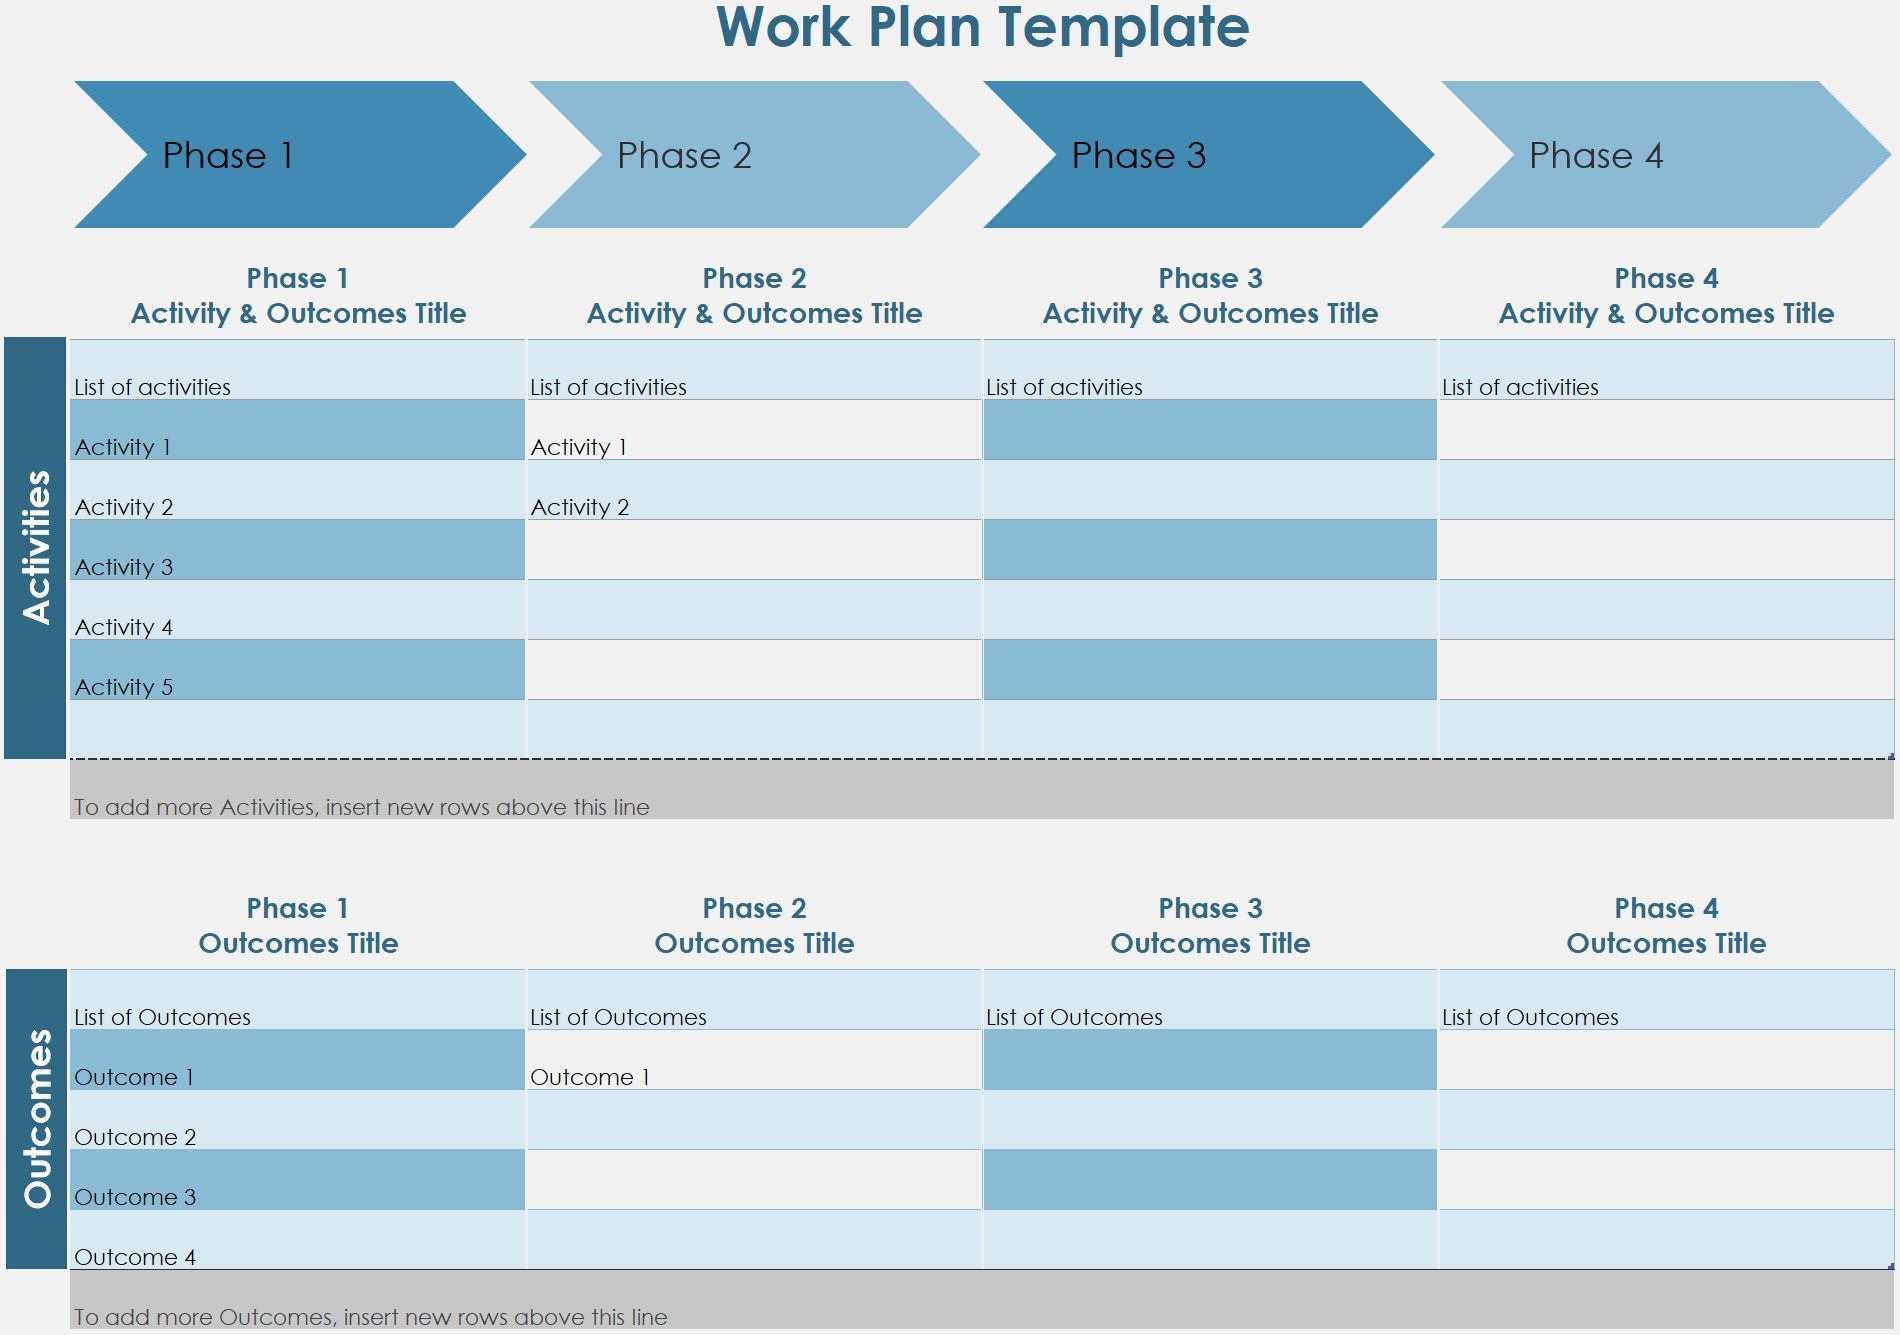 Blank Work Plan Template in Microsoft Excel.